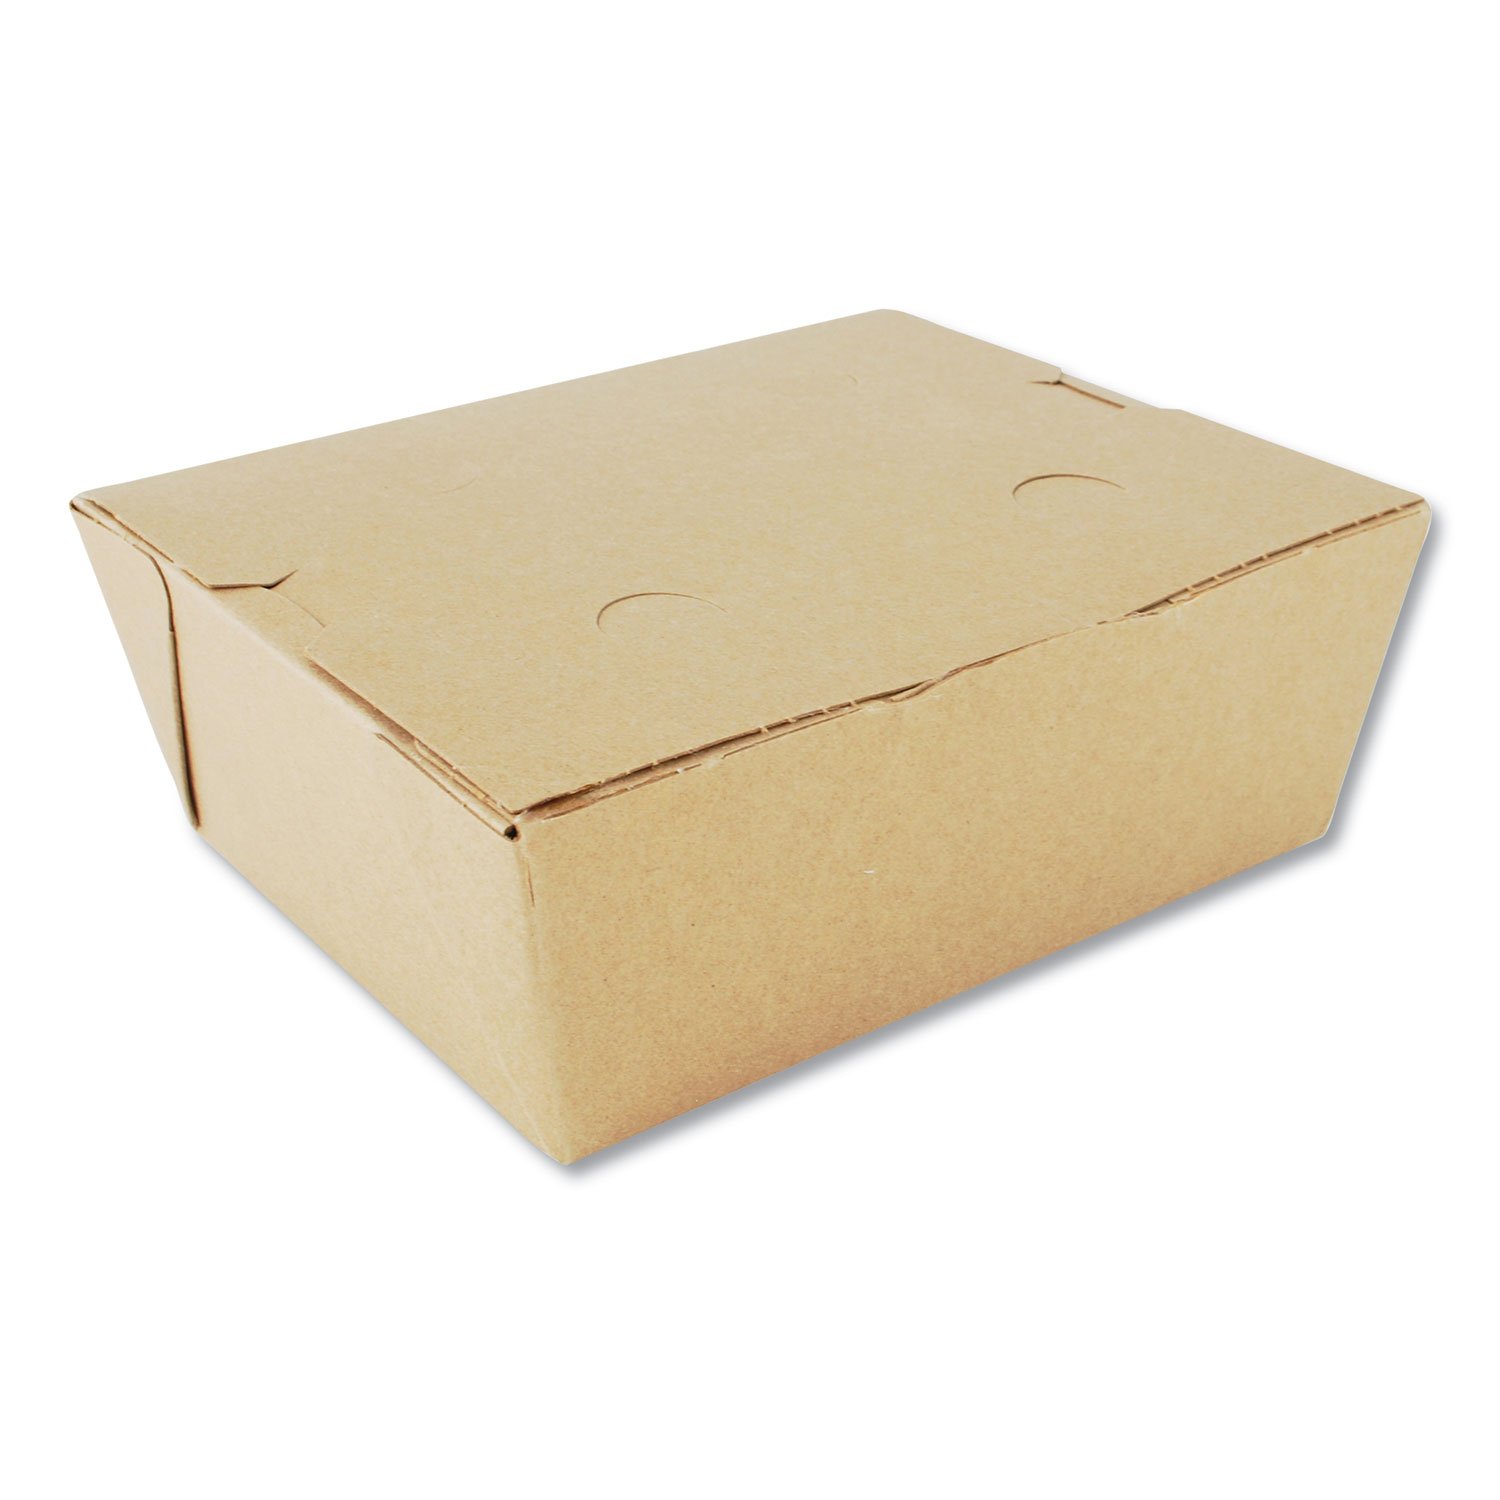  SCT SCH 0738 ChampPak Retro Carryout Boxes #8, Kraft, 6 x 4.75 x 2.5, 300/Carton (SCH0738) 